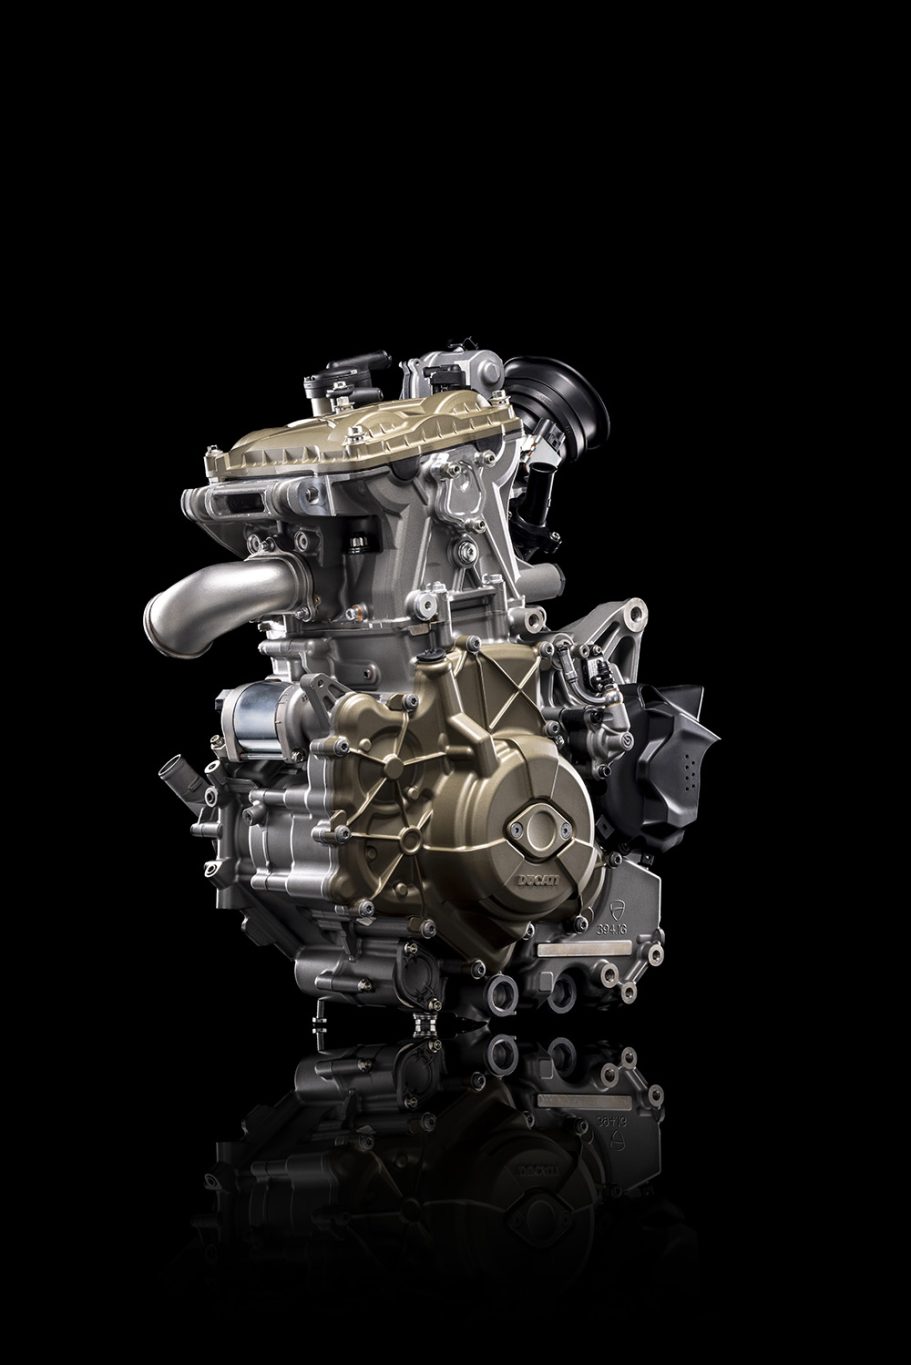 Ducati Superquadro Mono Engine 9 Uc570339 Low